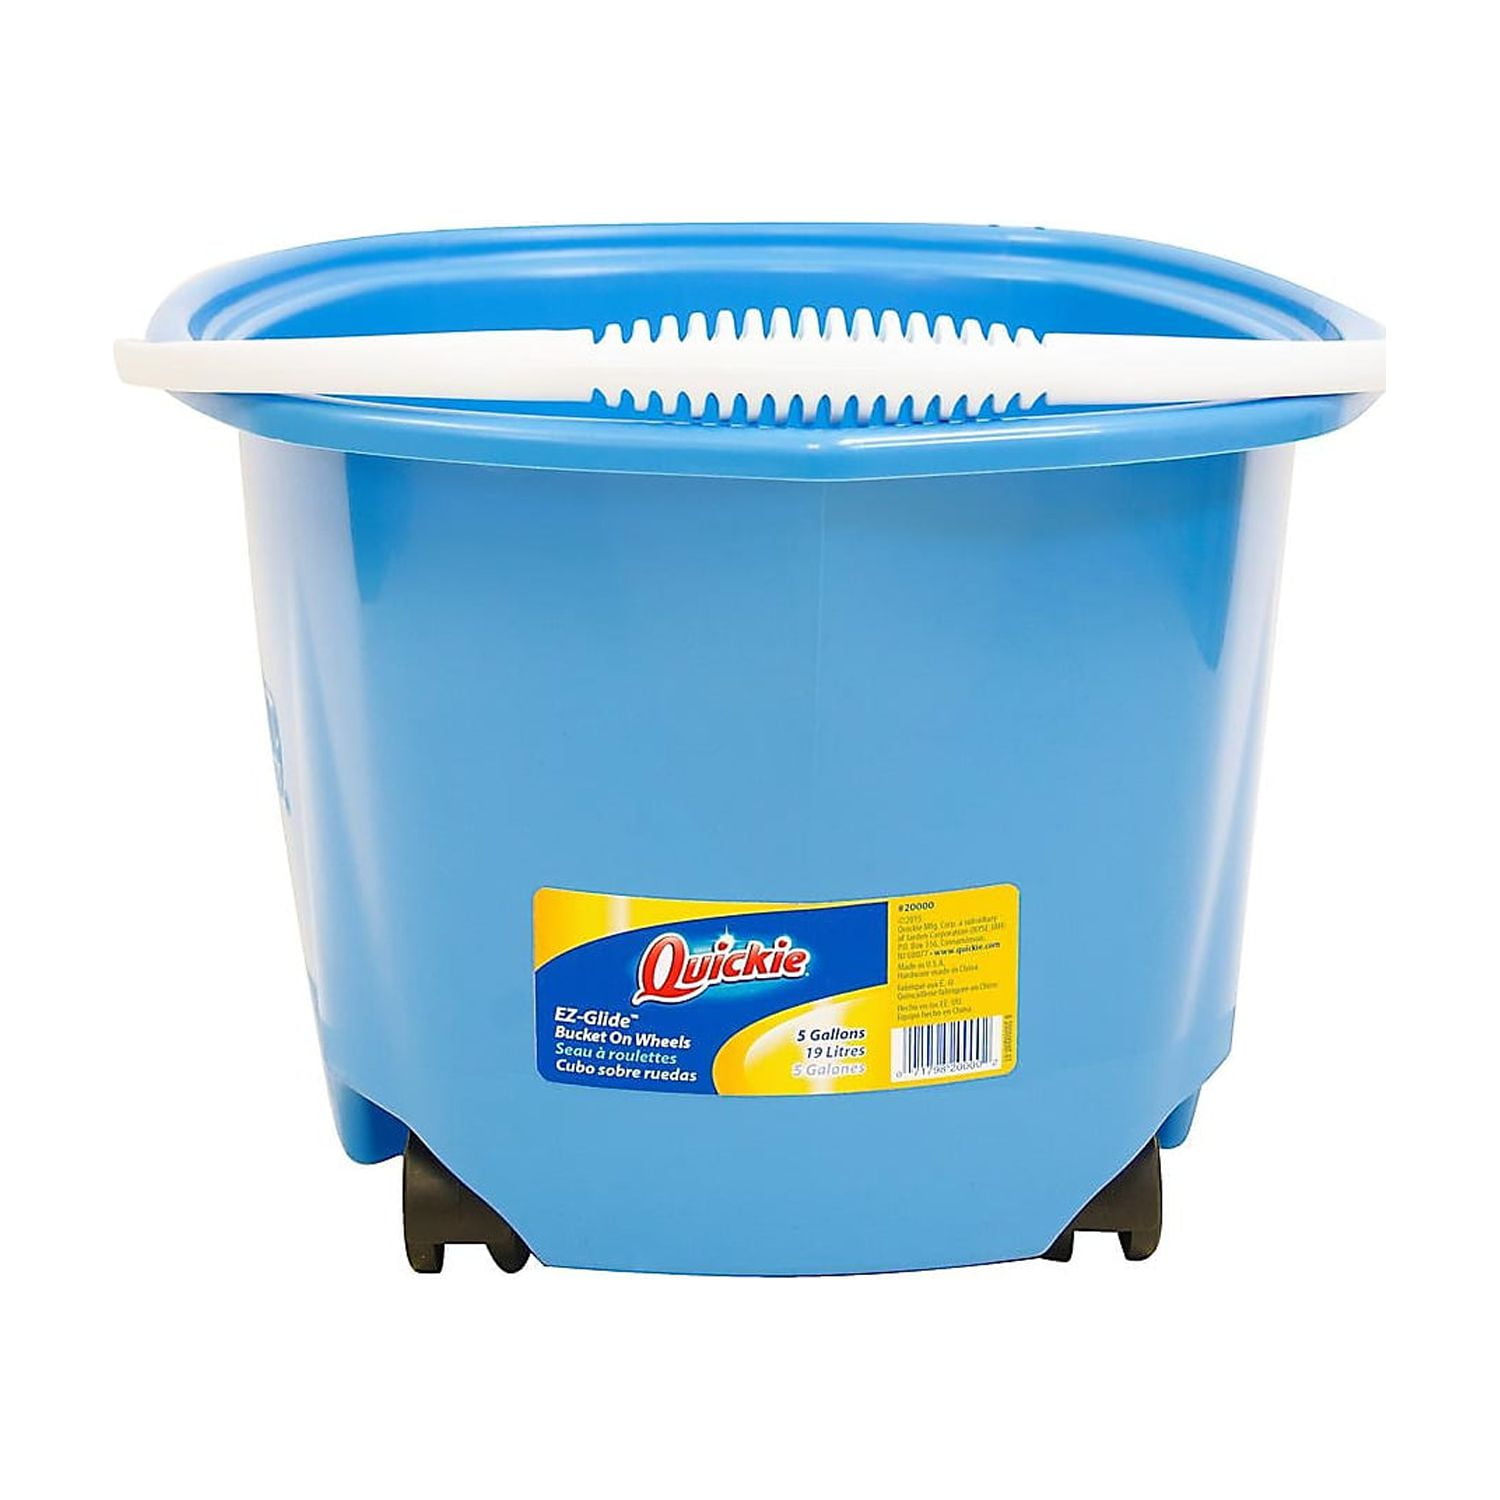 Casabella 4 Gallon Storage Bucket Caddy Bin w/ Handle for Cleaning, White 